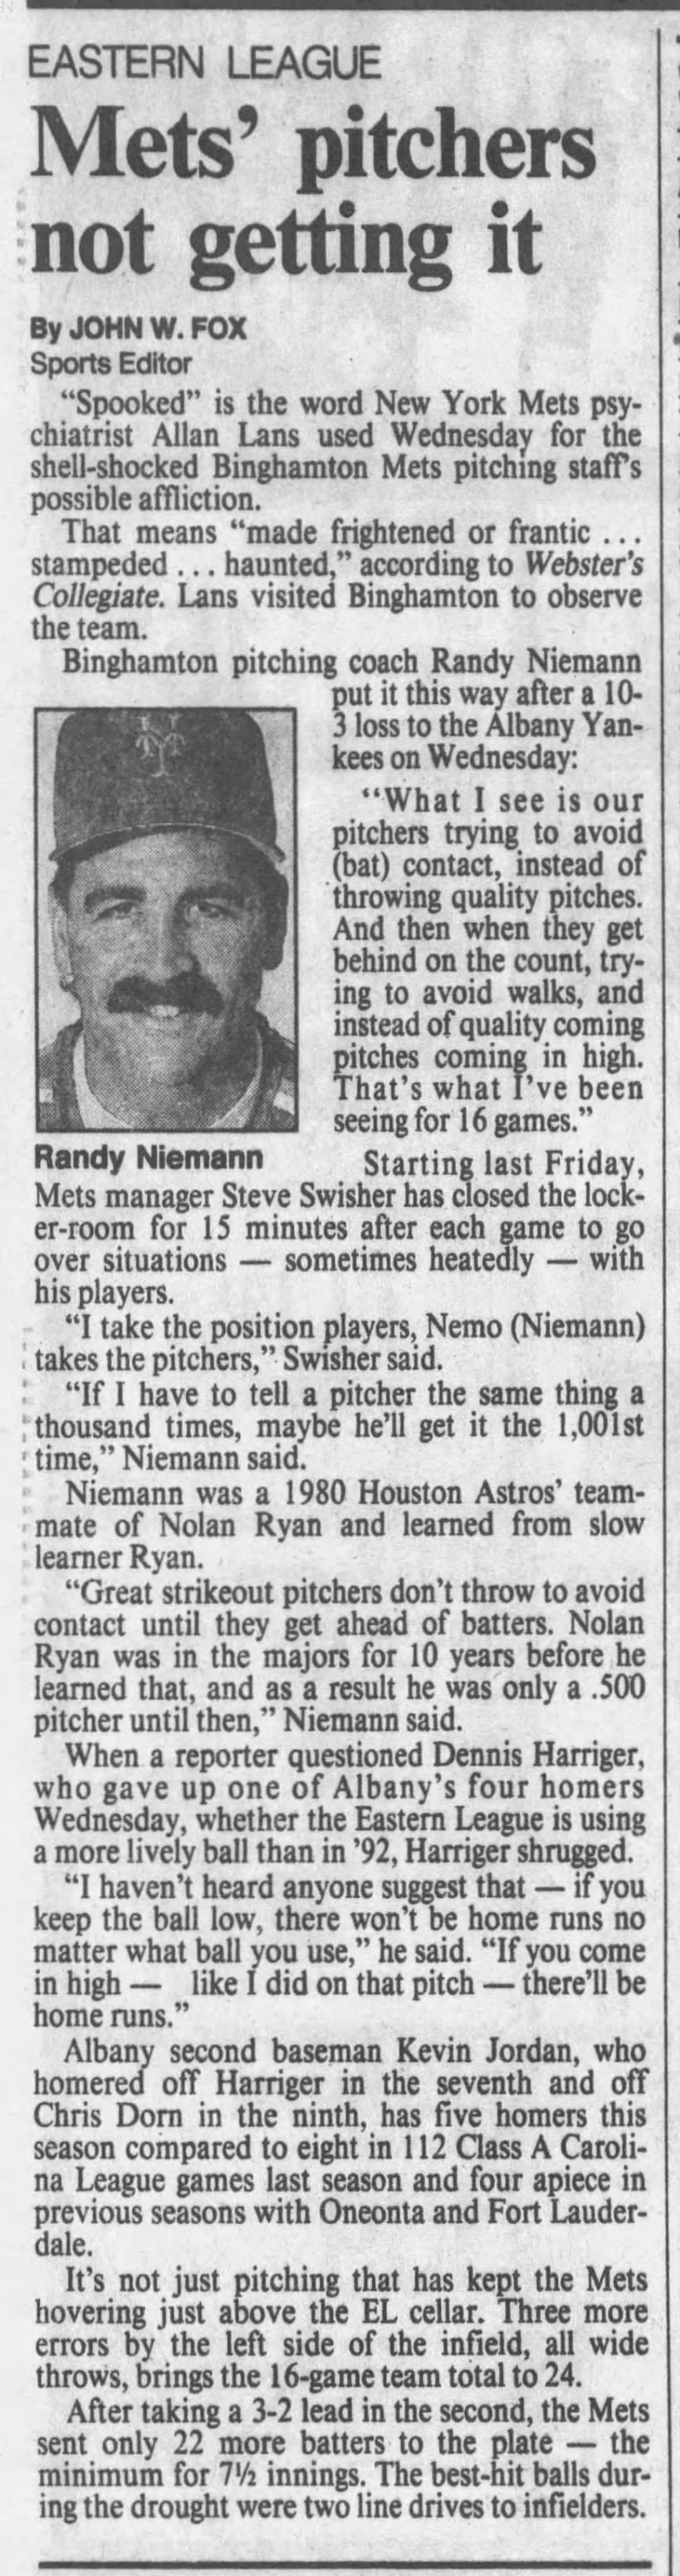 Randy Niemann - April 29, 1993 - Greatest21Days.com